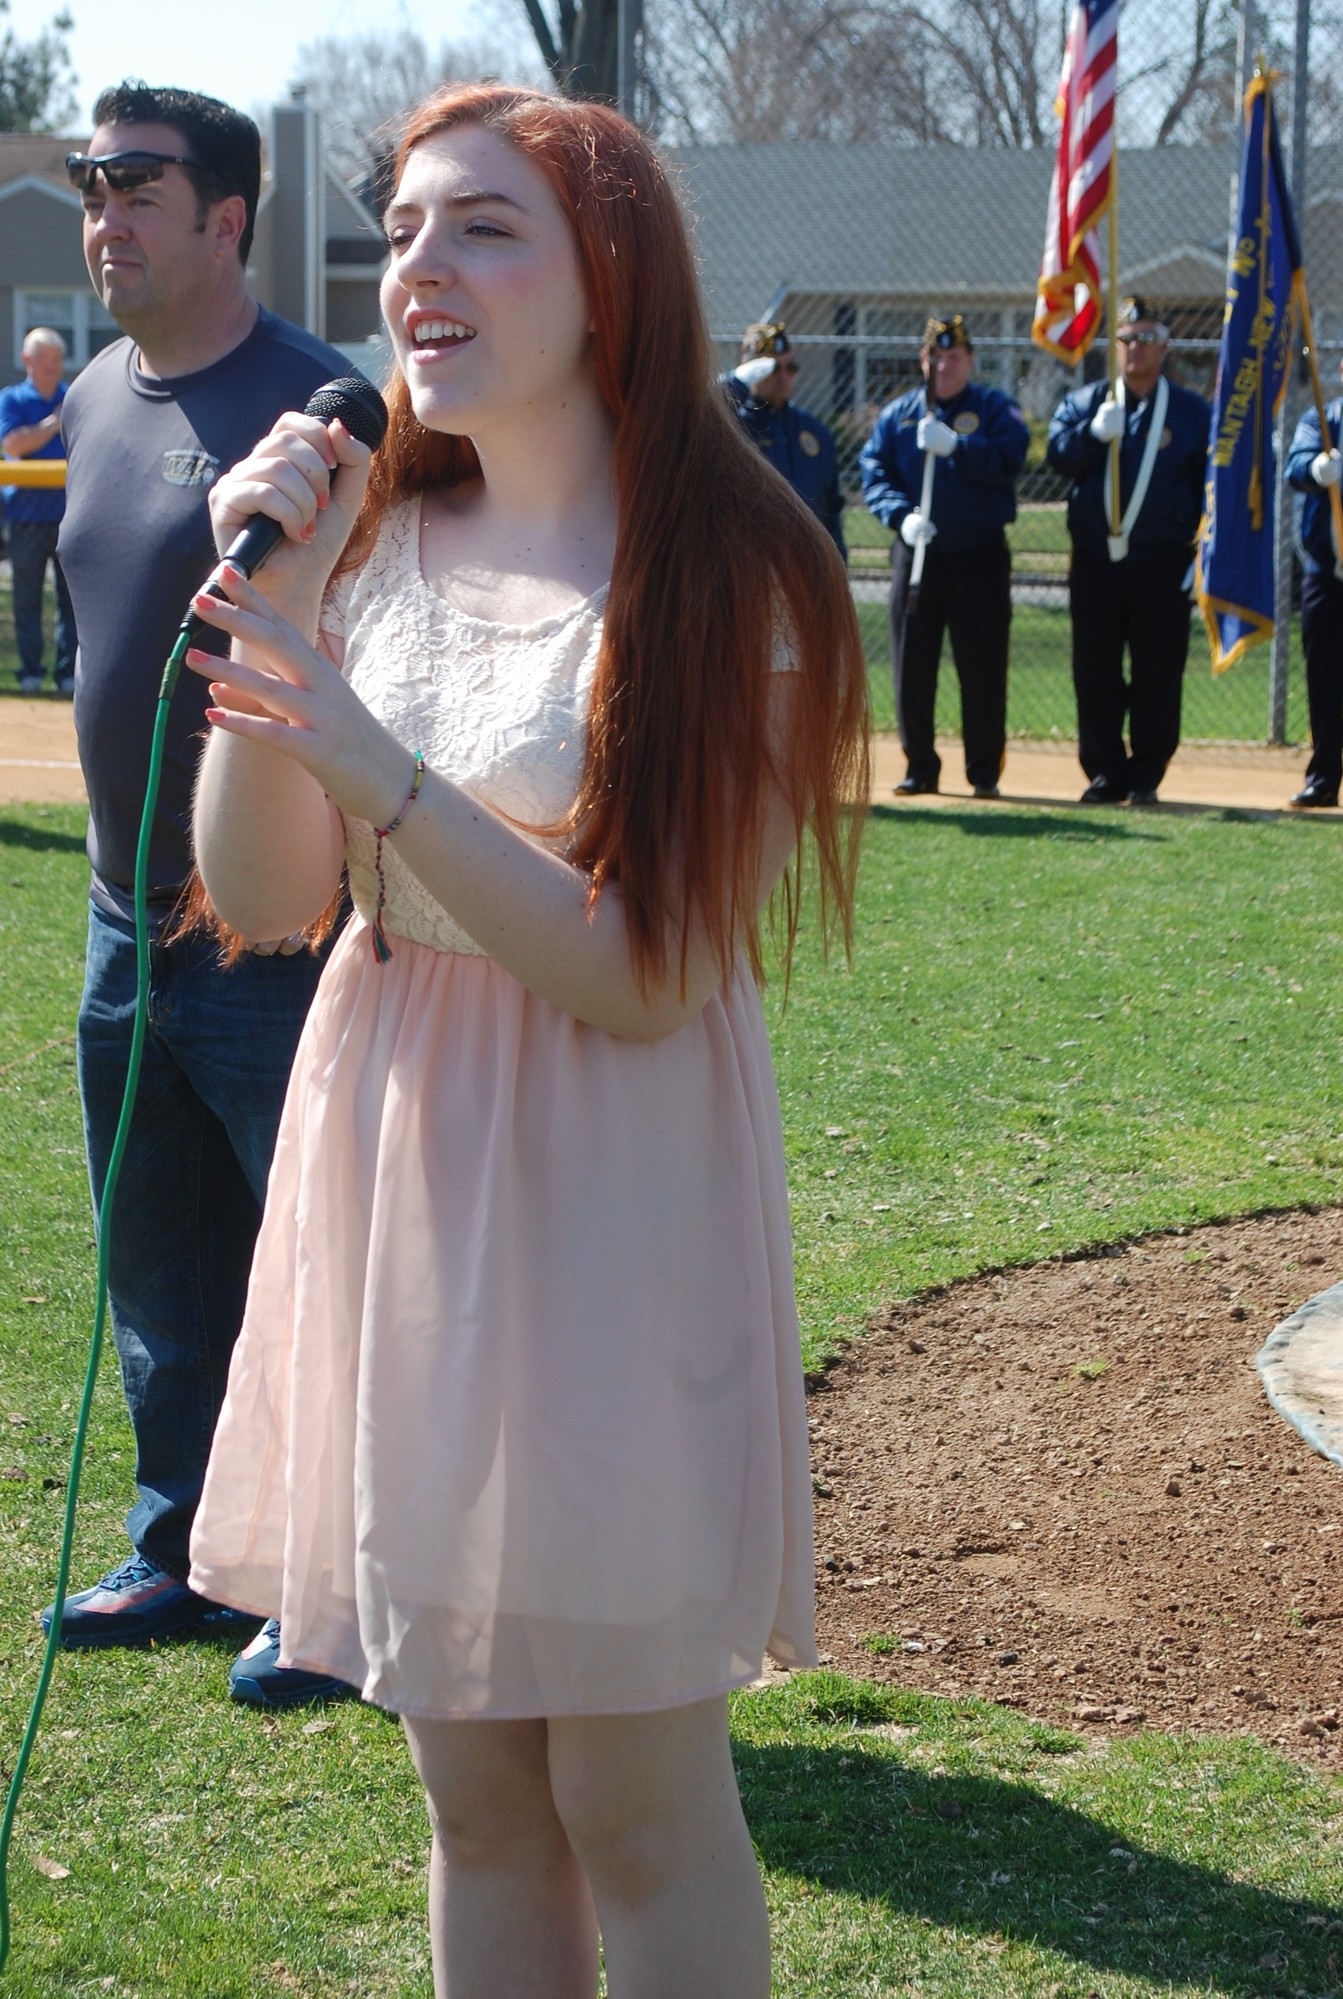 Erin Bortell, a Wantagh High School senior, sang the National Anthem.